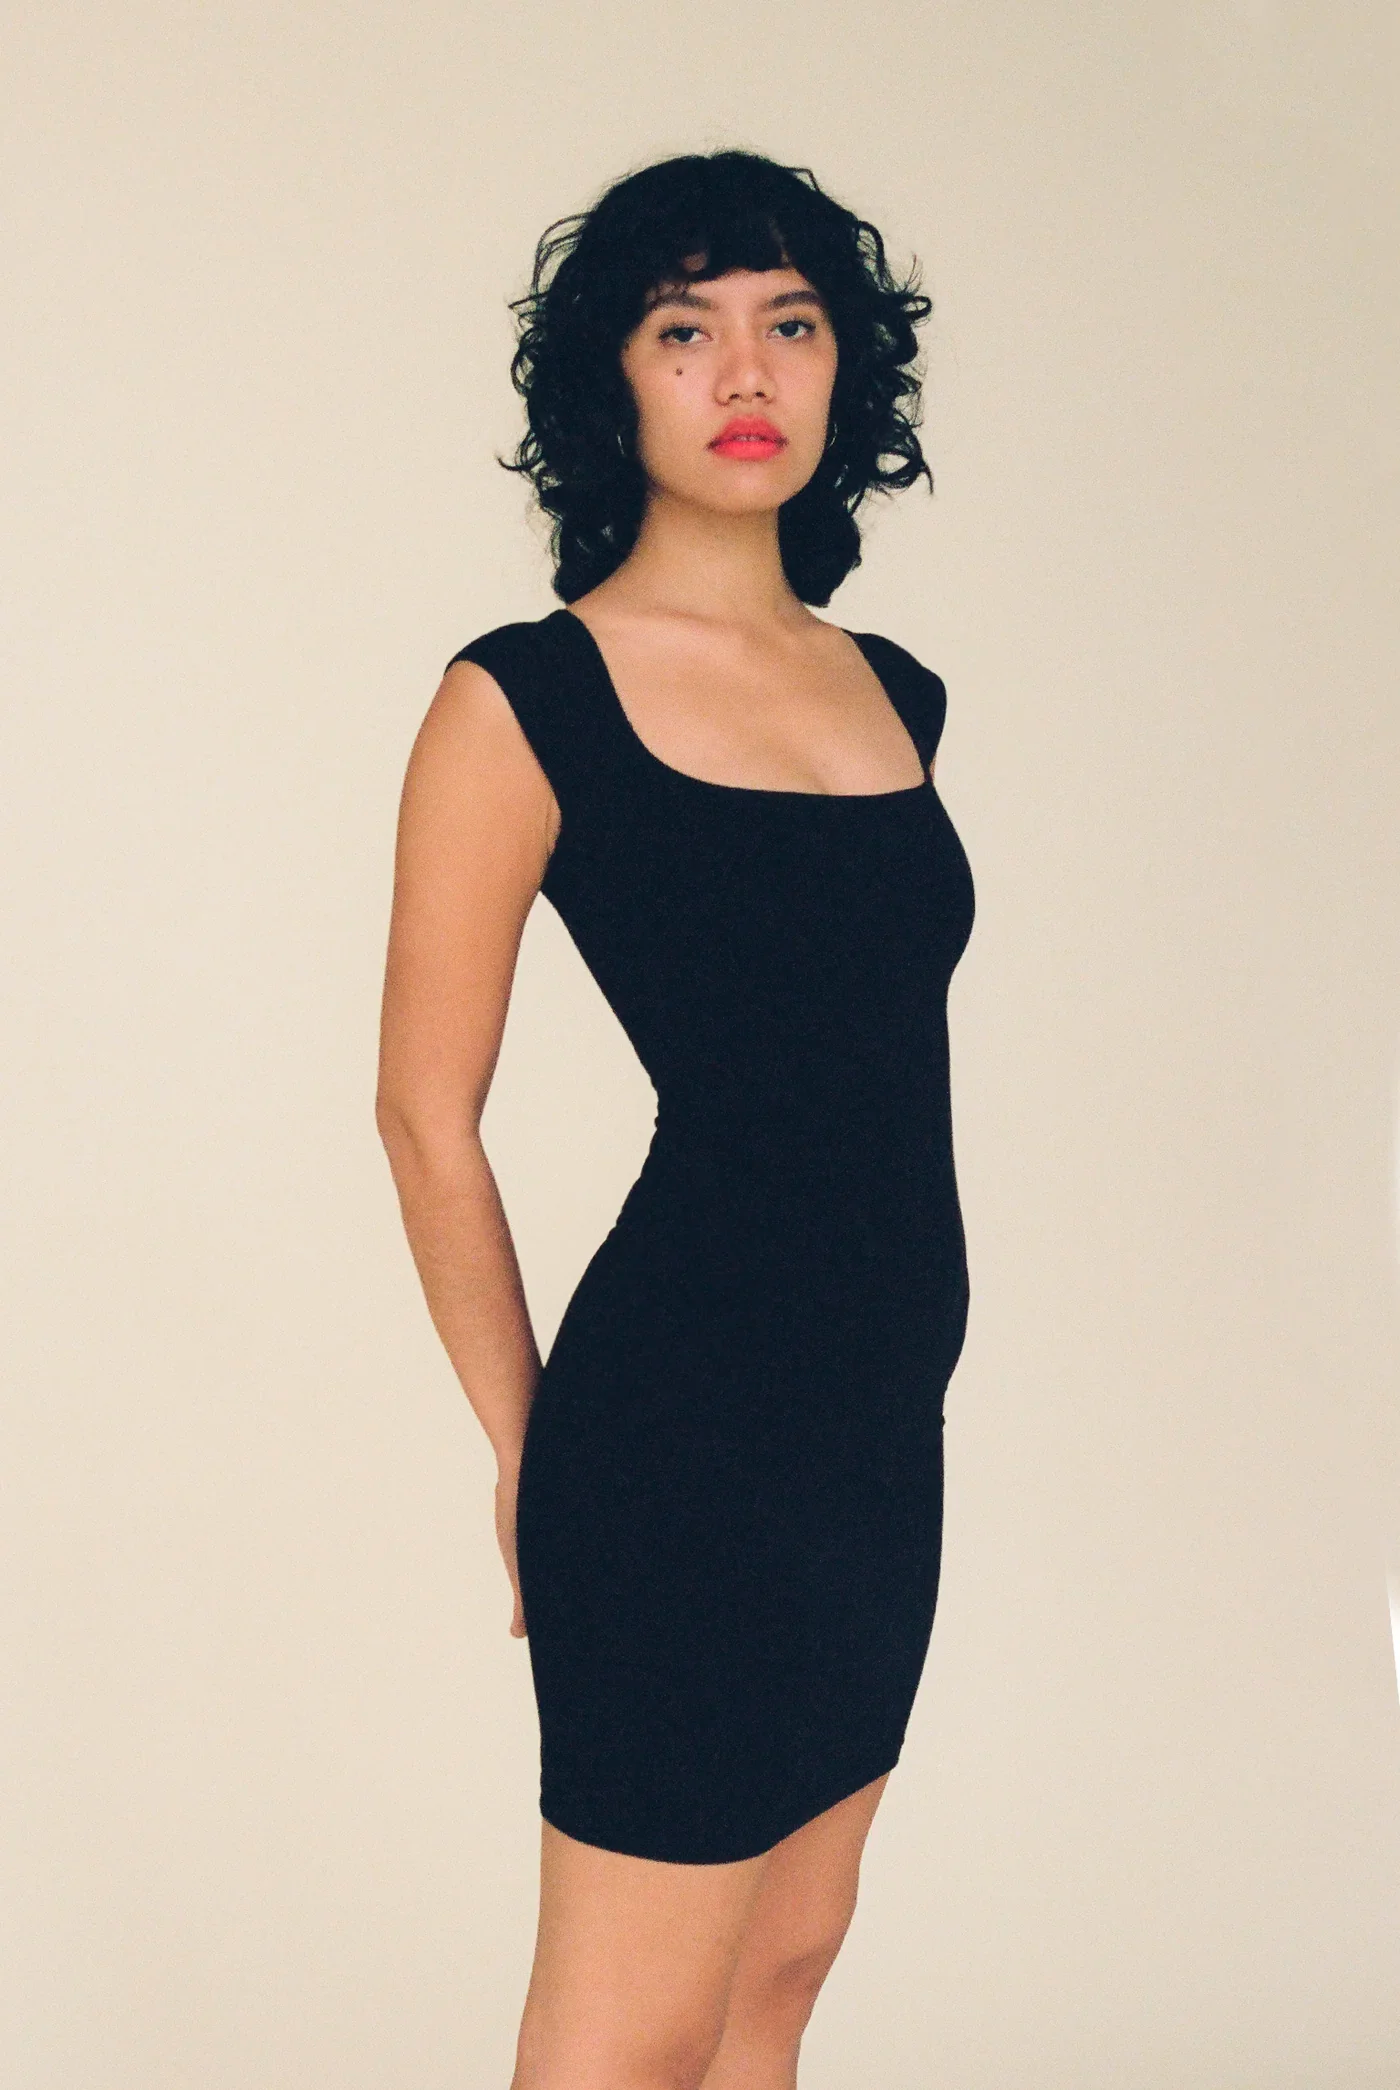 Product Image for El Tigre Mini Dress, Black